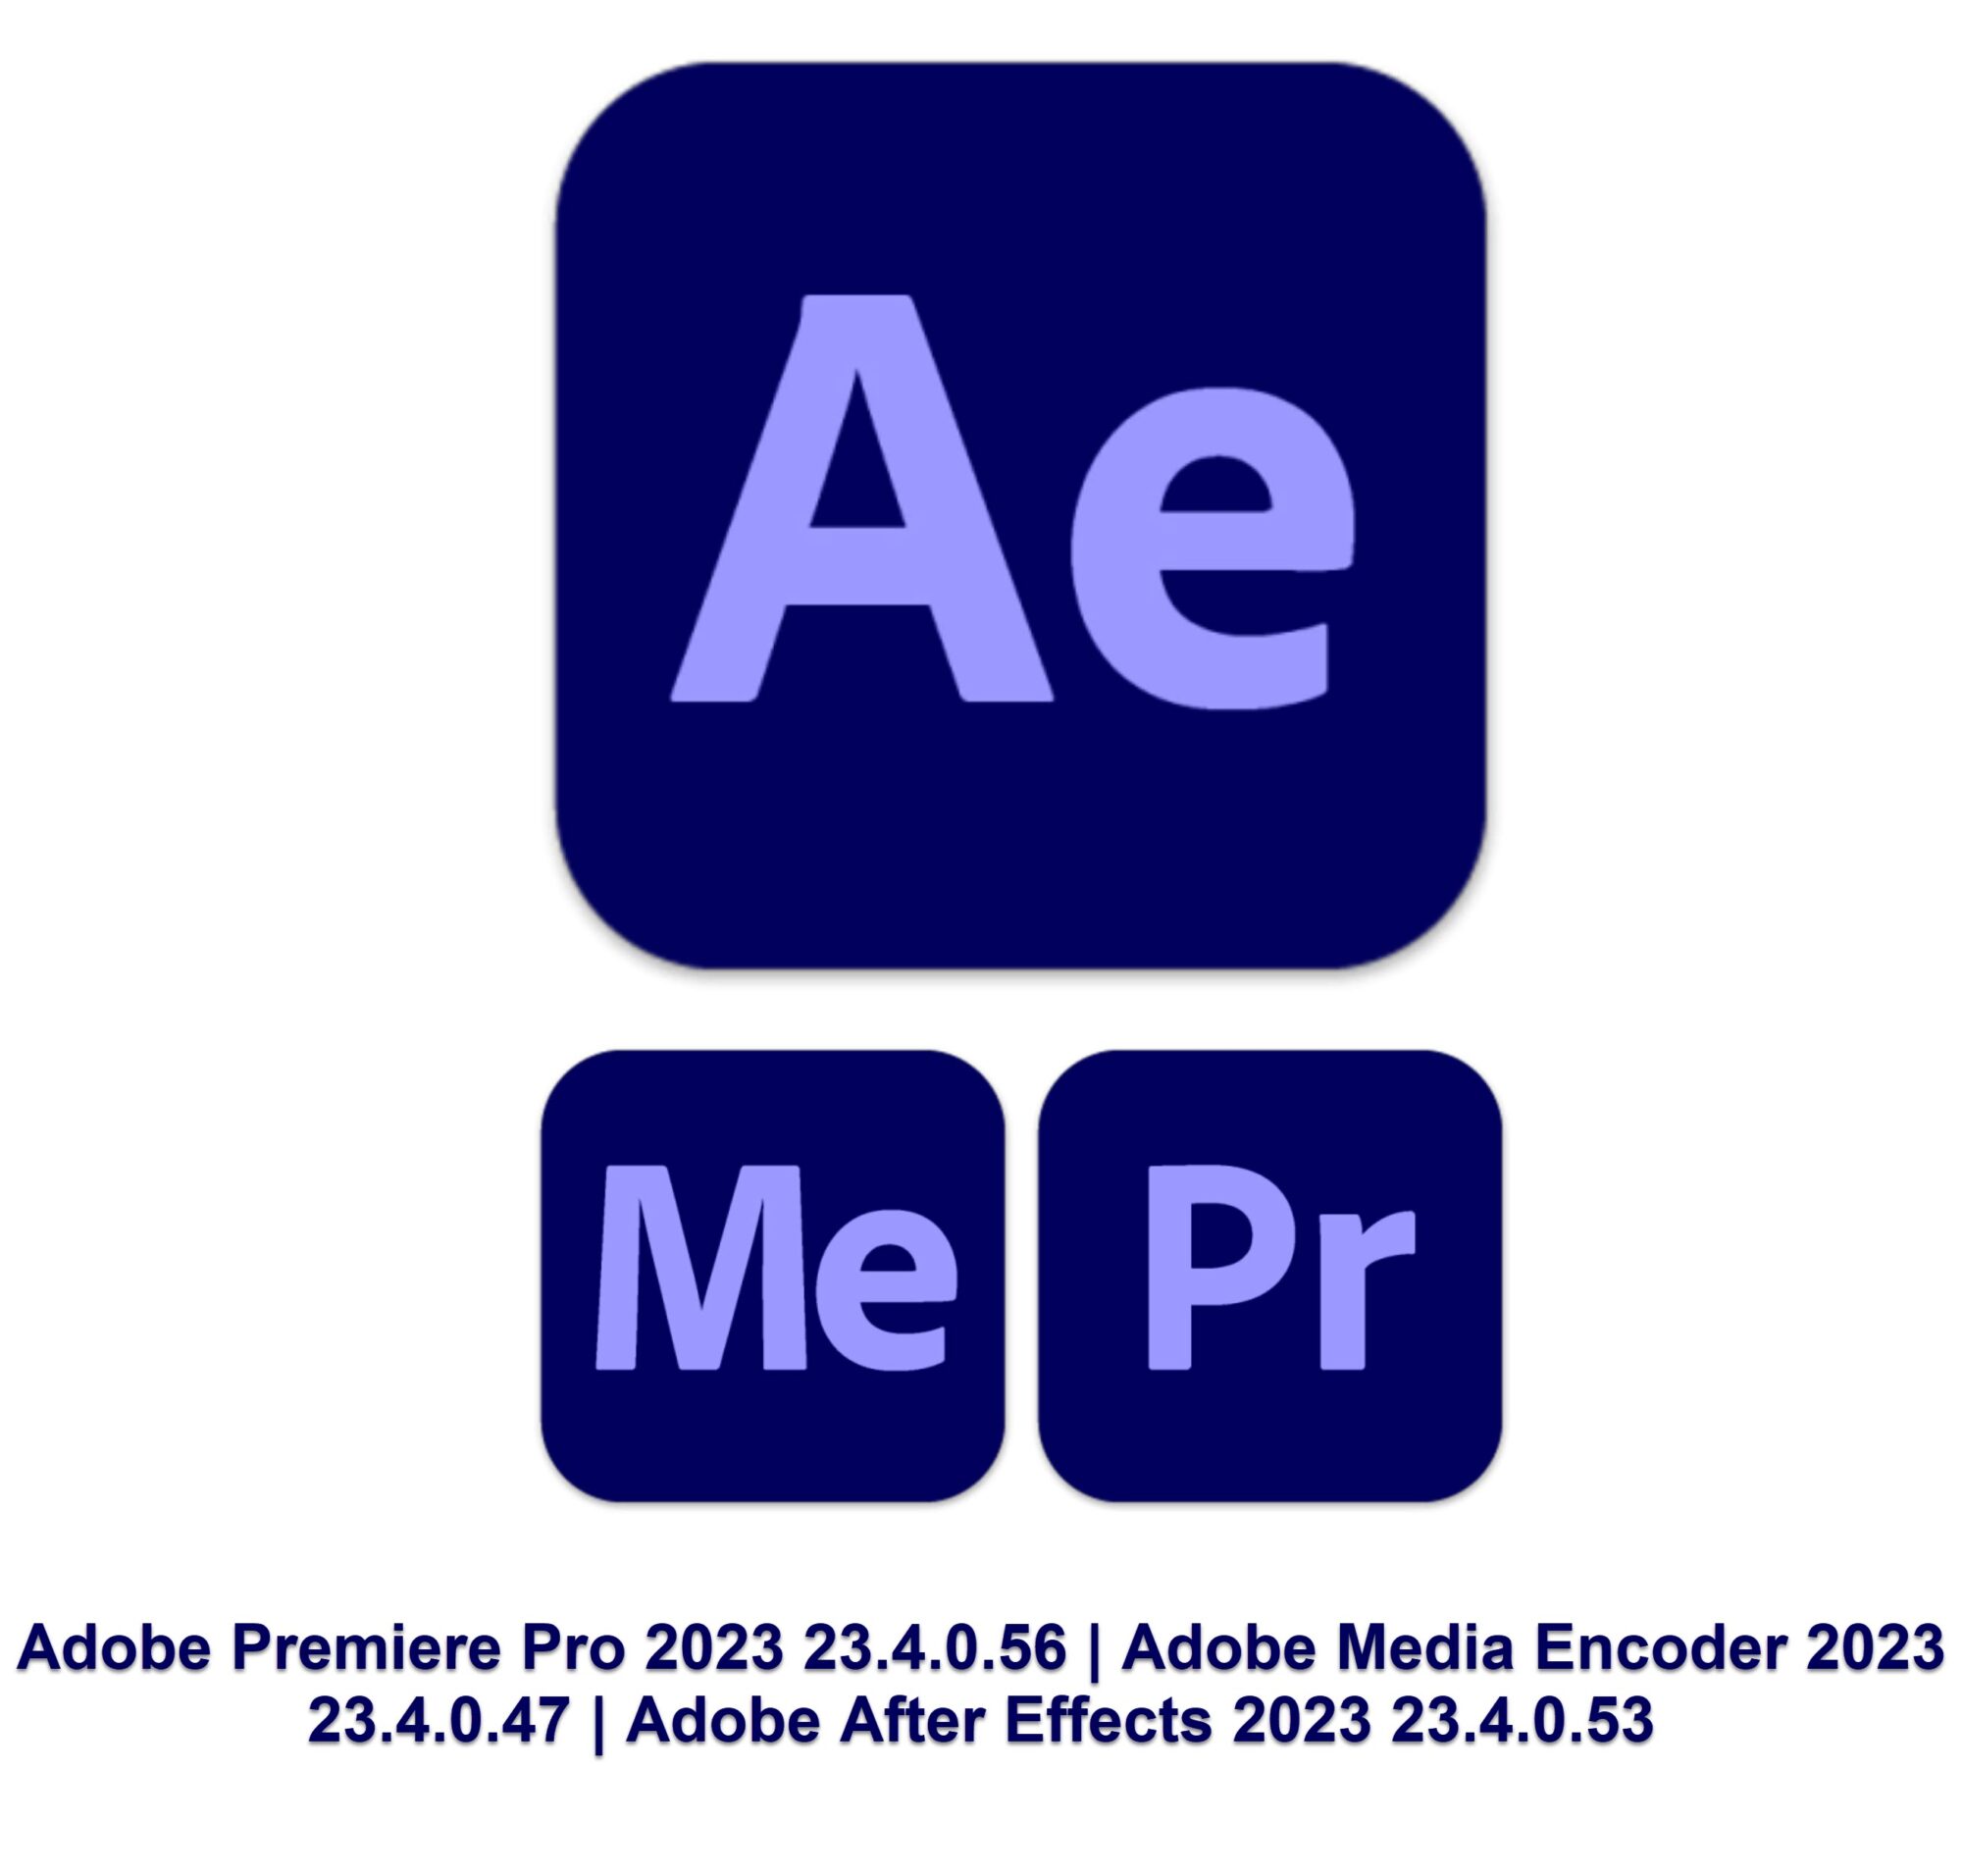 Adobe Premiere Pro 2023 23.4.0.56 | Adobe Media Encoder 2023 23.4.0.47 | Adobe After Effects 2023 23.4.0.53 نسخ ريباك مفعلة مدى الحياة